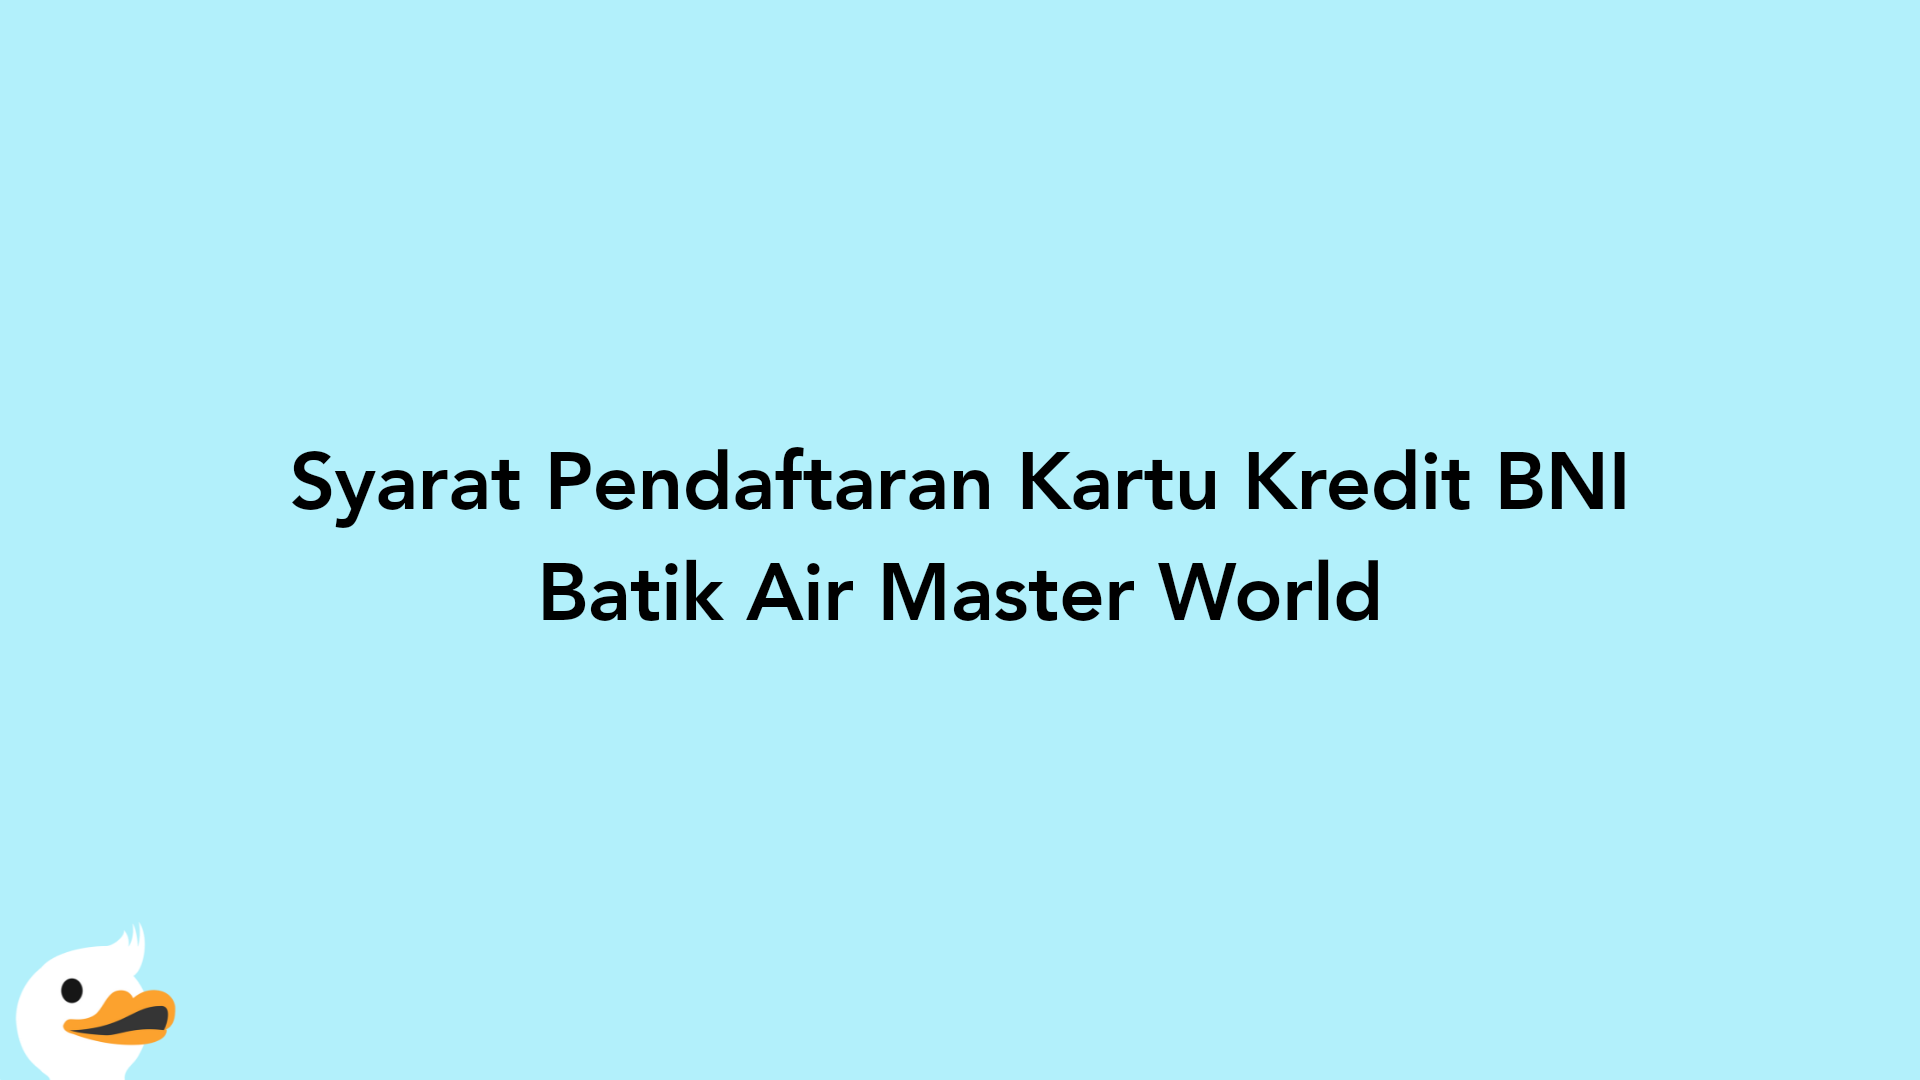 Syarat Pendaftaran Kartu Kredit BNI Batik Air Master World